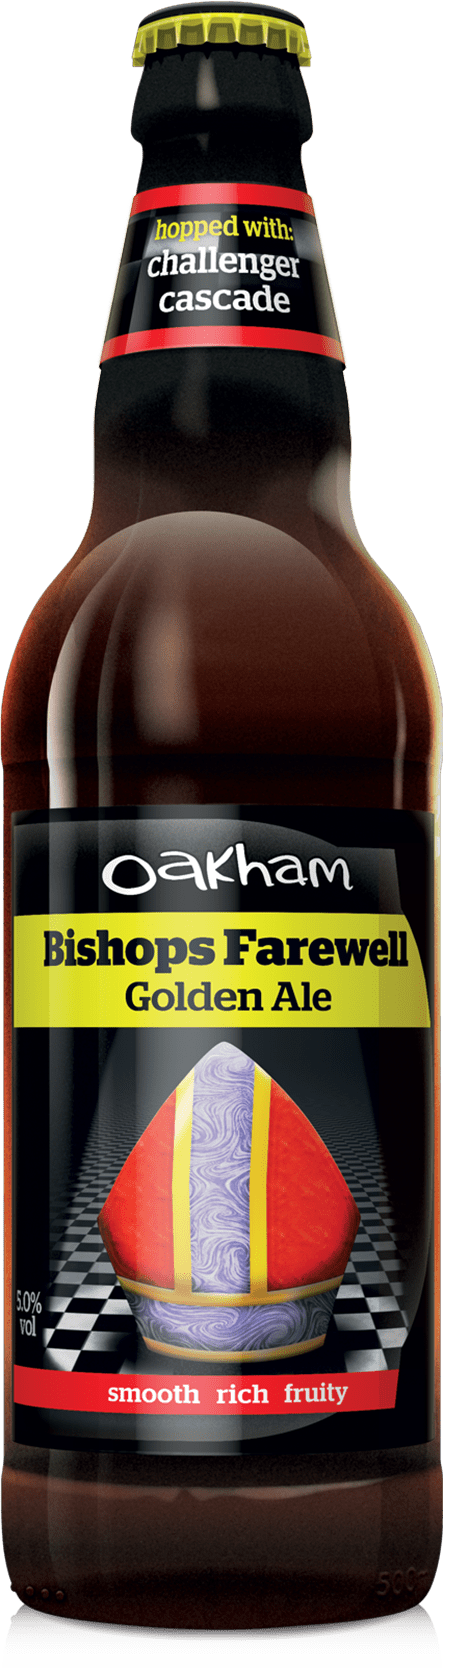 Bishops Farewell bottle